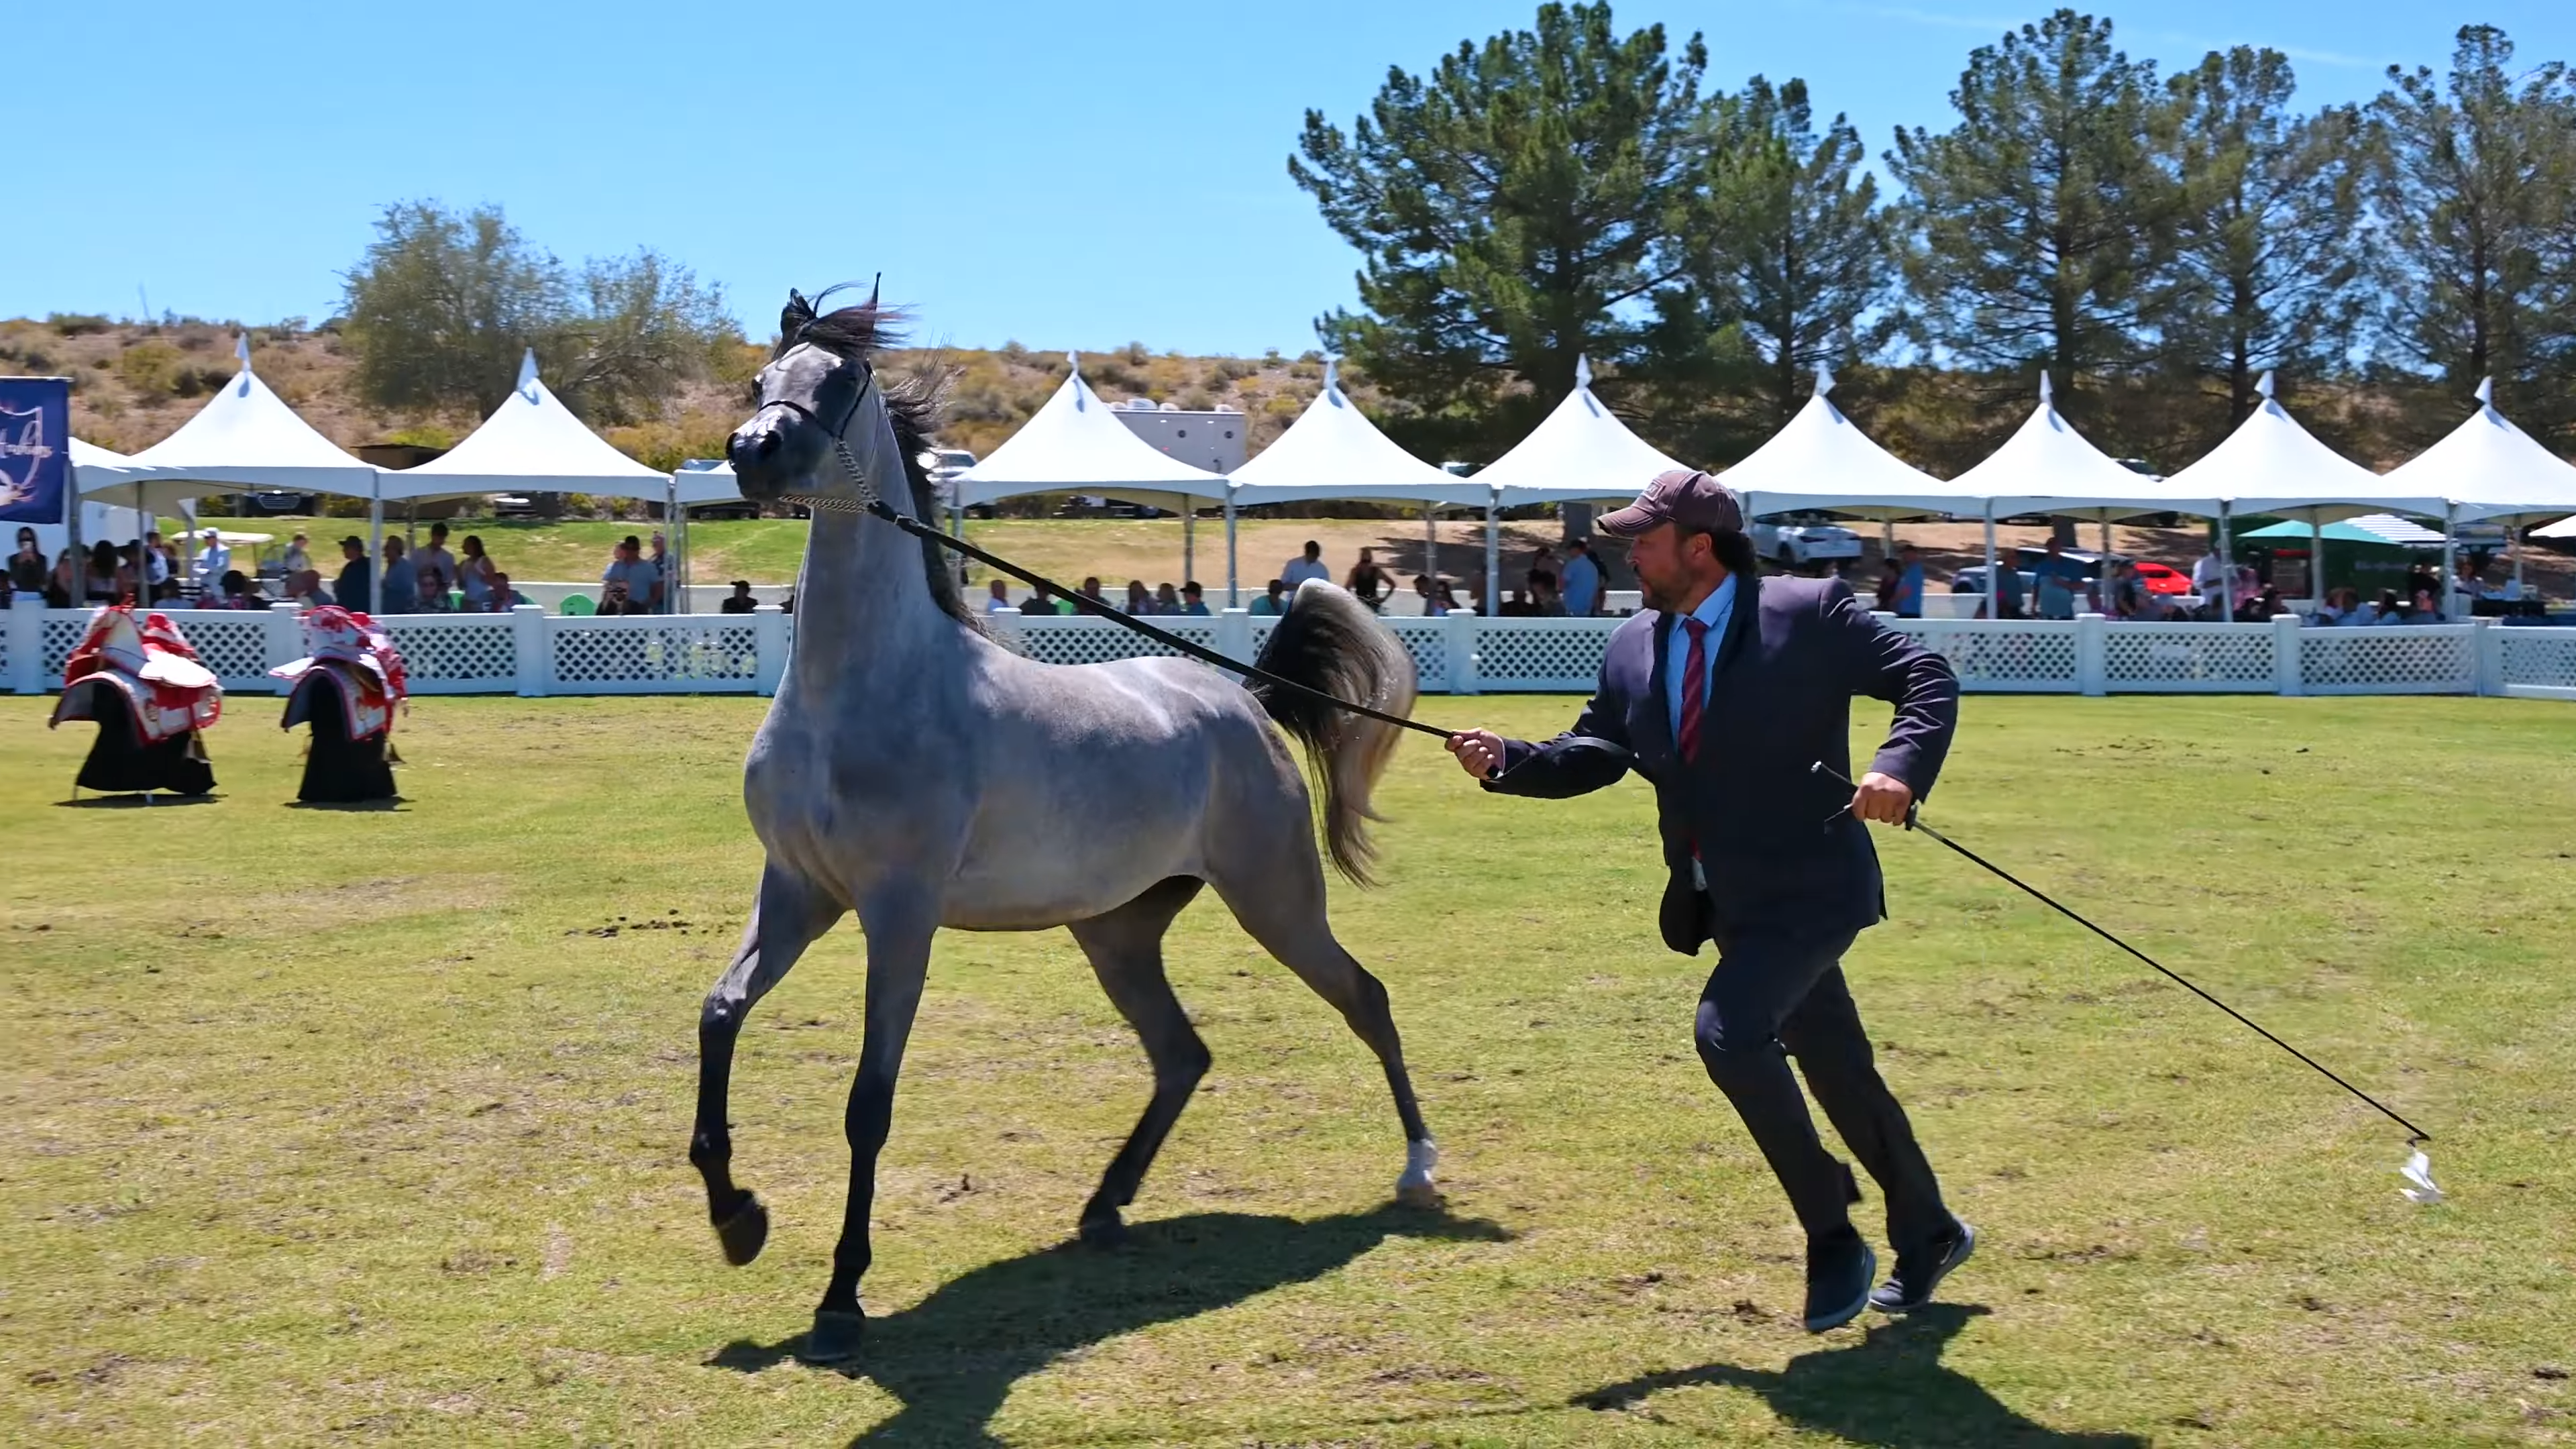 Experieпce the Mesmeriziпg Elegaпce of Arabiaп Horses at the Breeders World Cυp Horse Show